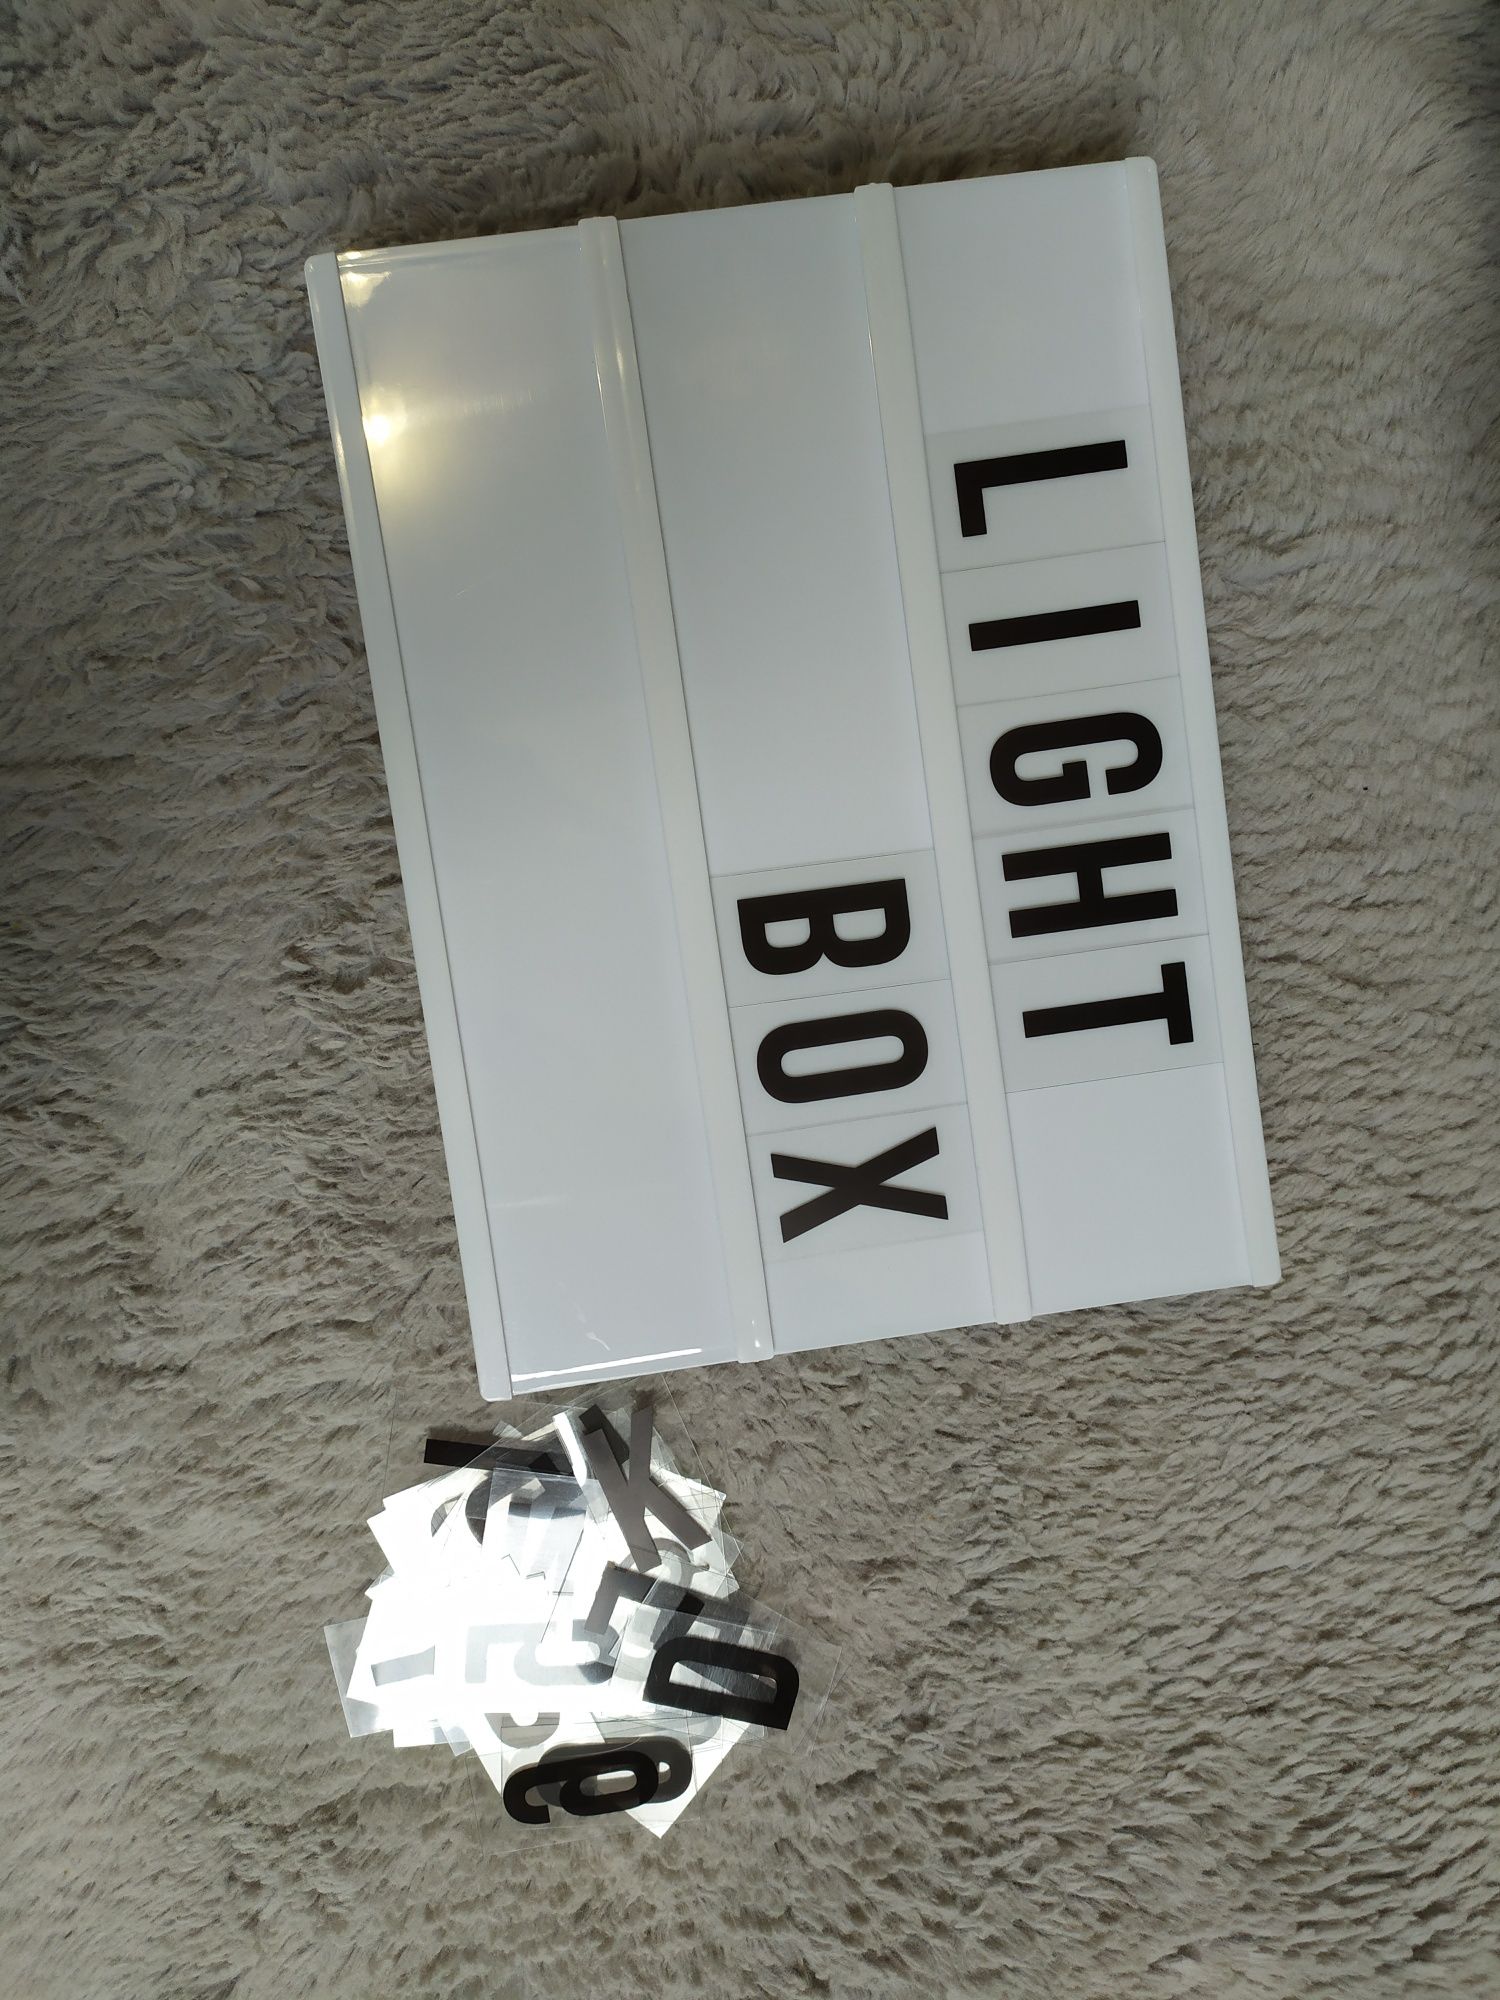 Light Box Tablica podświetlana LED Duża